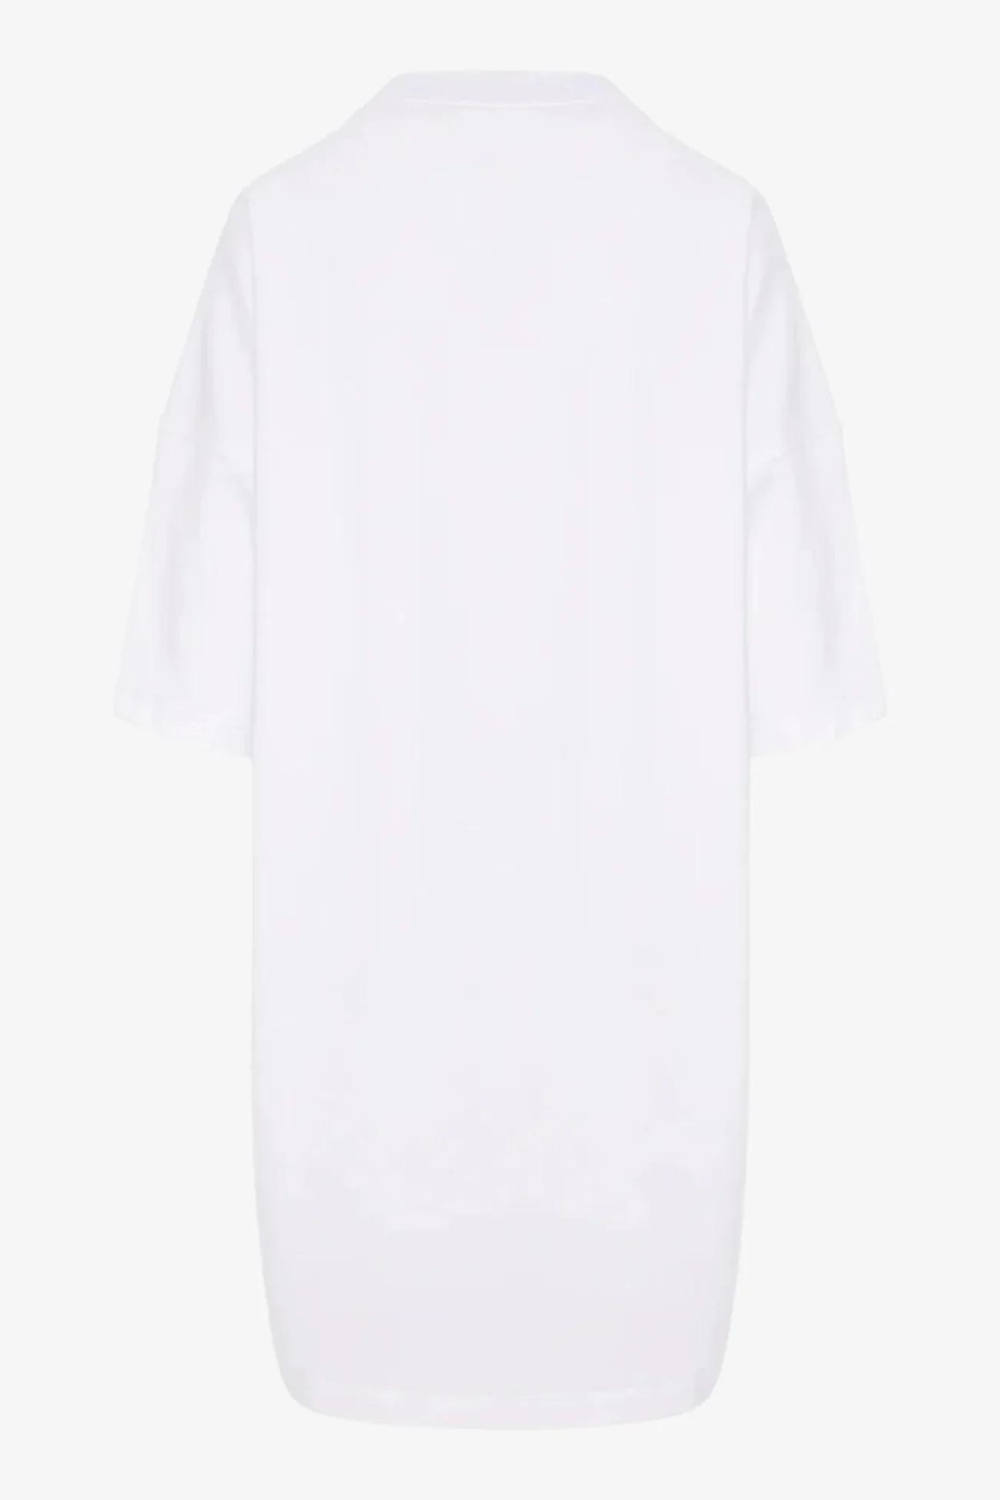 Tricou damă, alb, imprimeu Dark Corset, bumbac premium, croială oversized, detalii elegante (guler rotund, lungime midi).